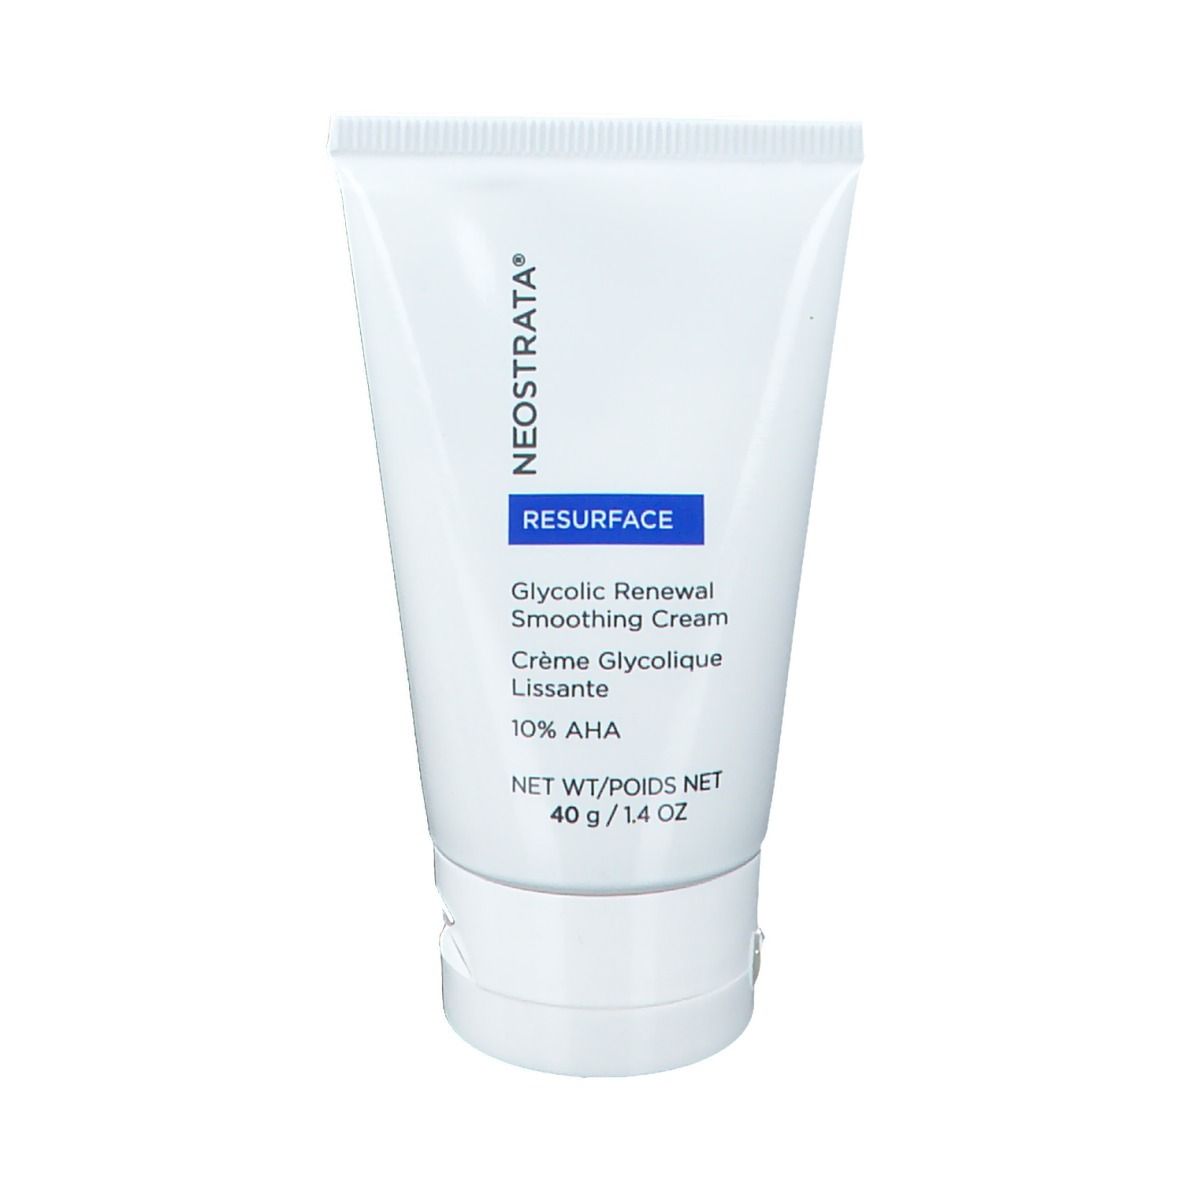 NeoStrata® Resurface Glycolic Renewal Smoothing Cream 10 AHA